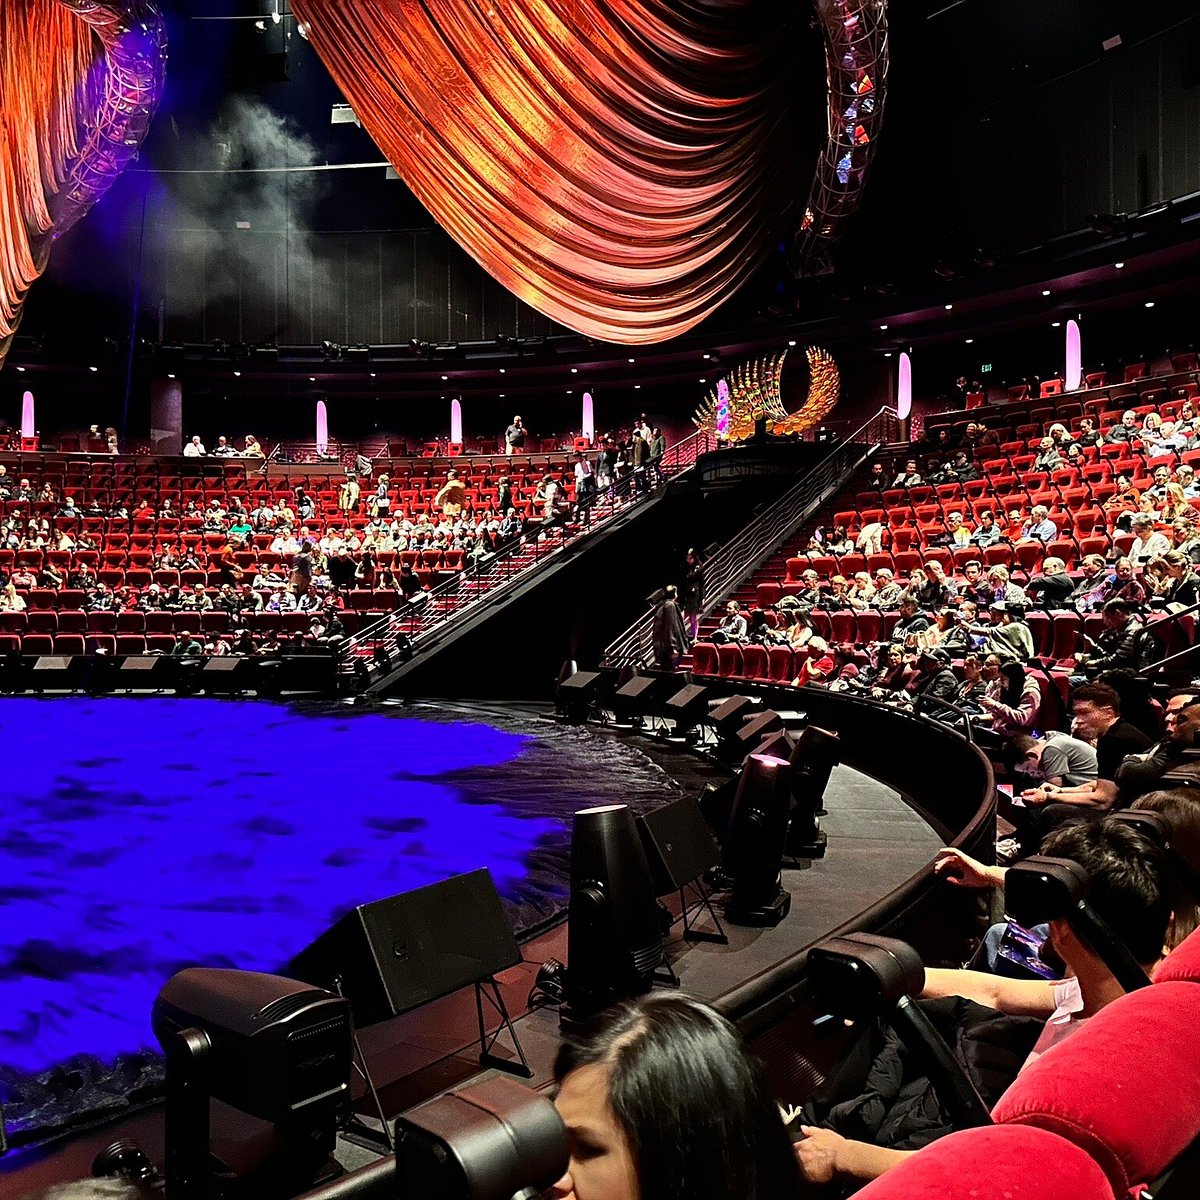 Le Reve The Dream Live Show at Wynn Las Vegas Musical Performances